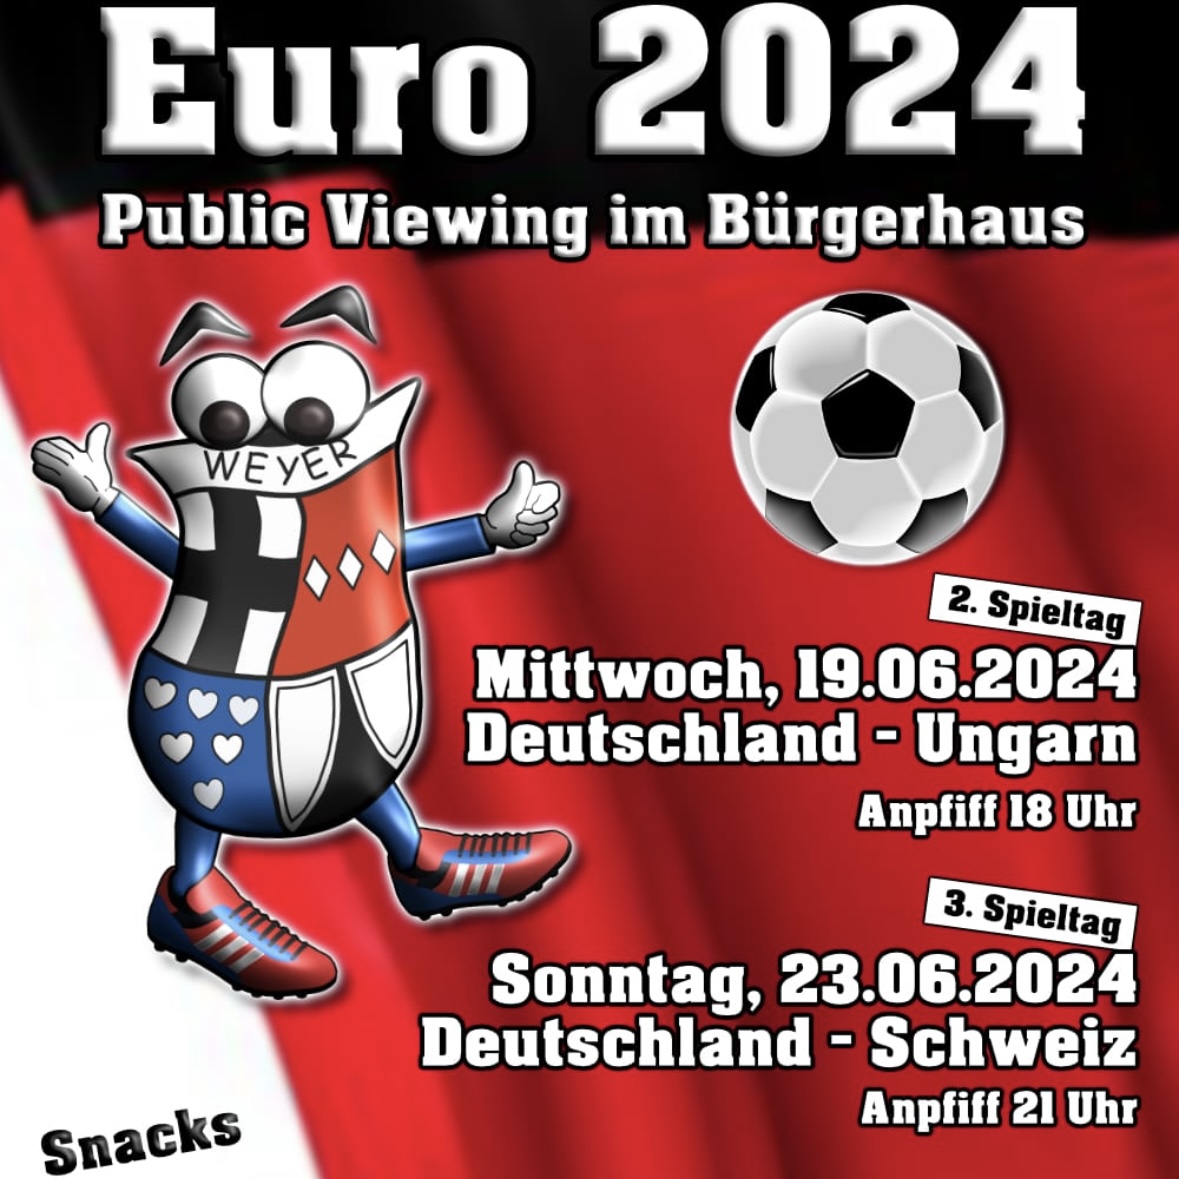 Euro 2024 - Achtelfinale im Bürgerhaus